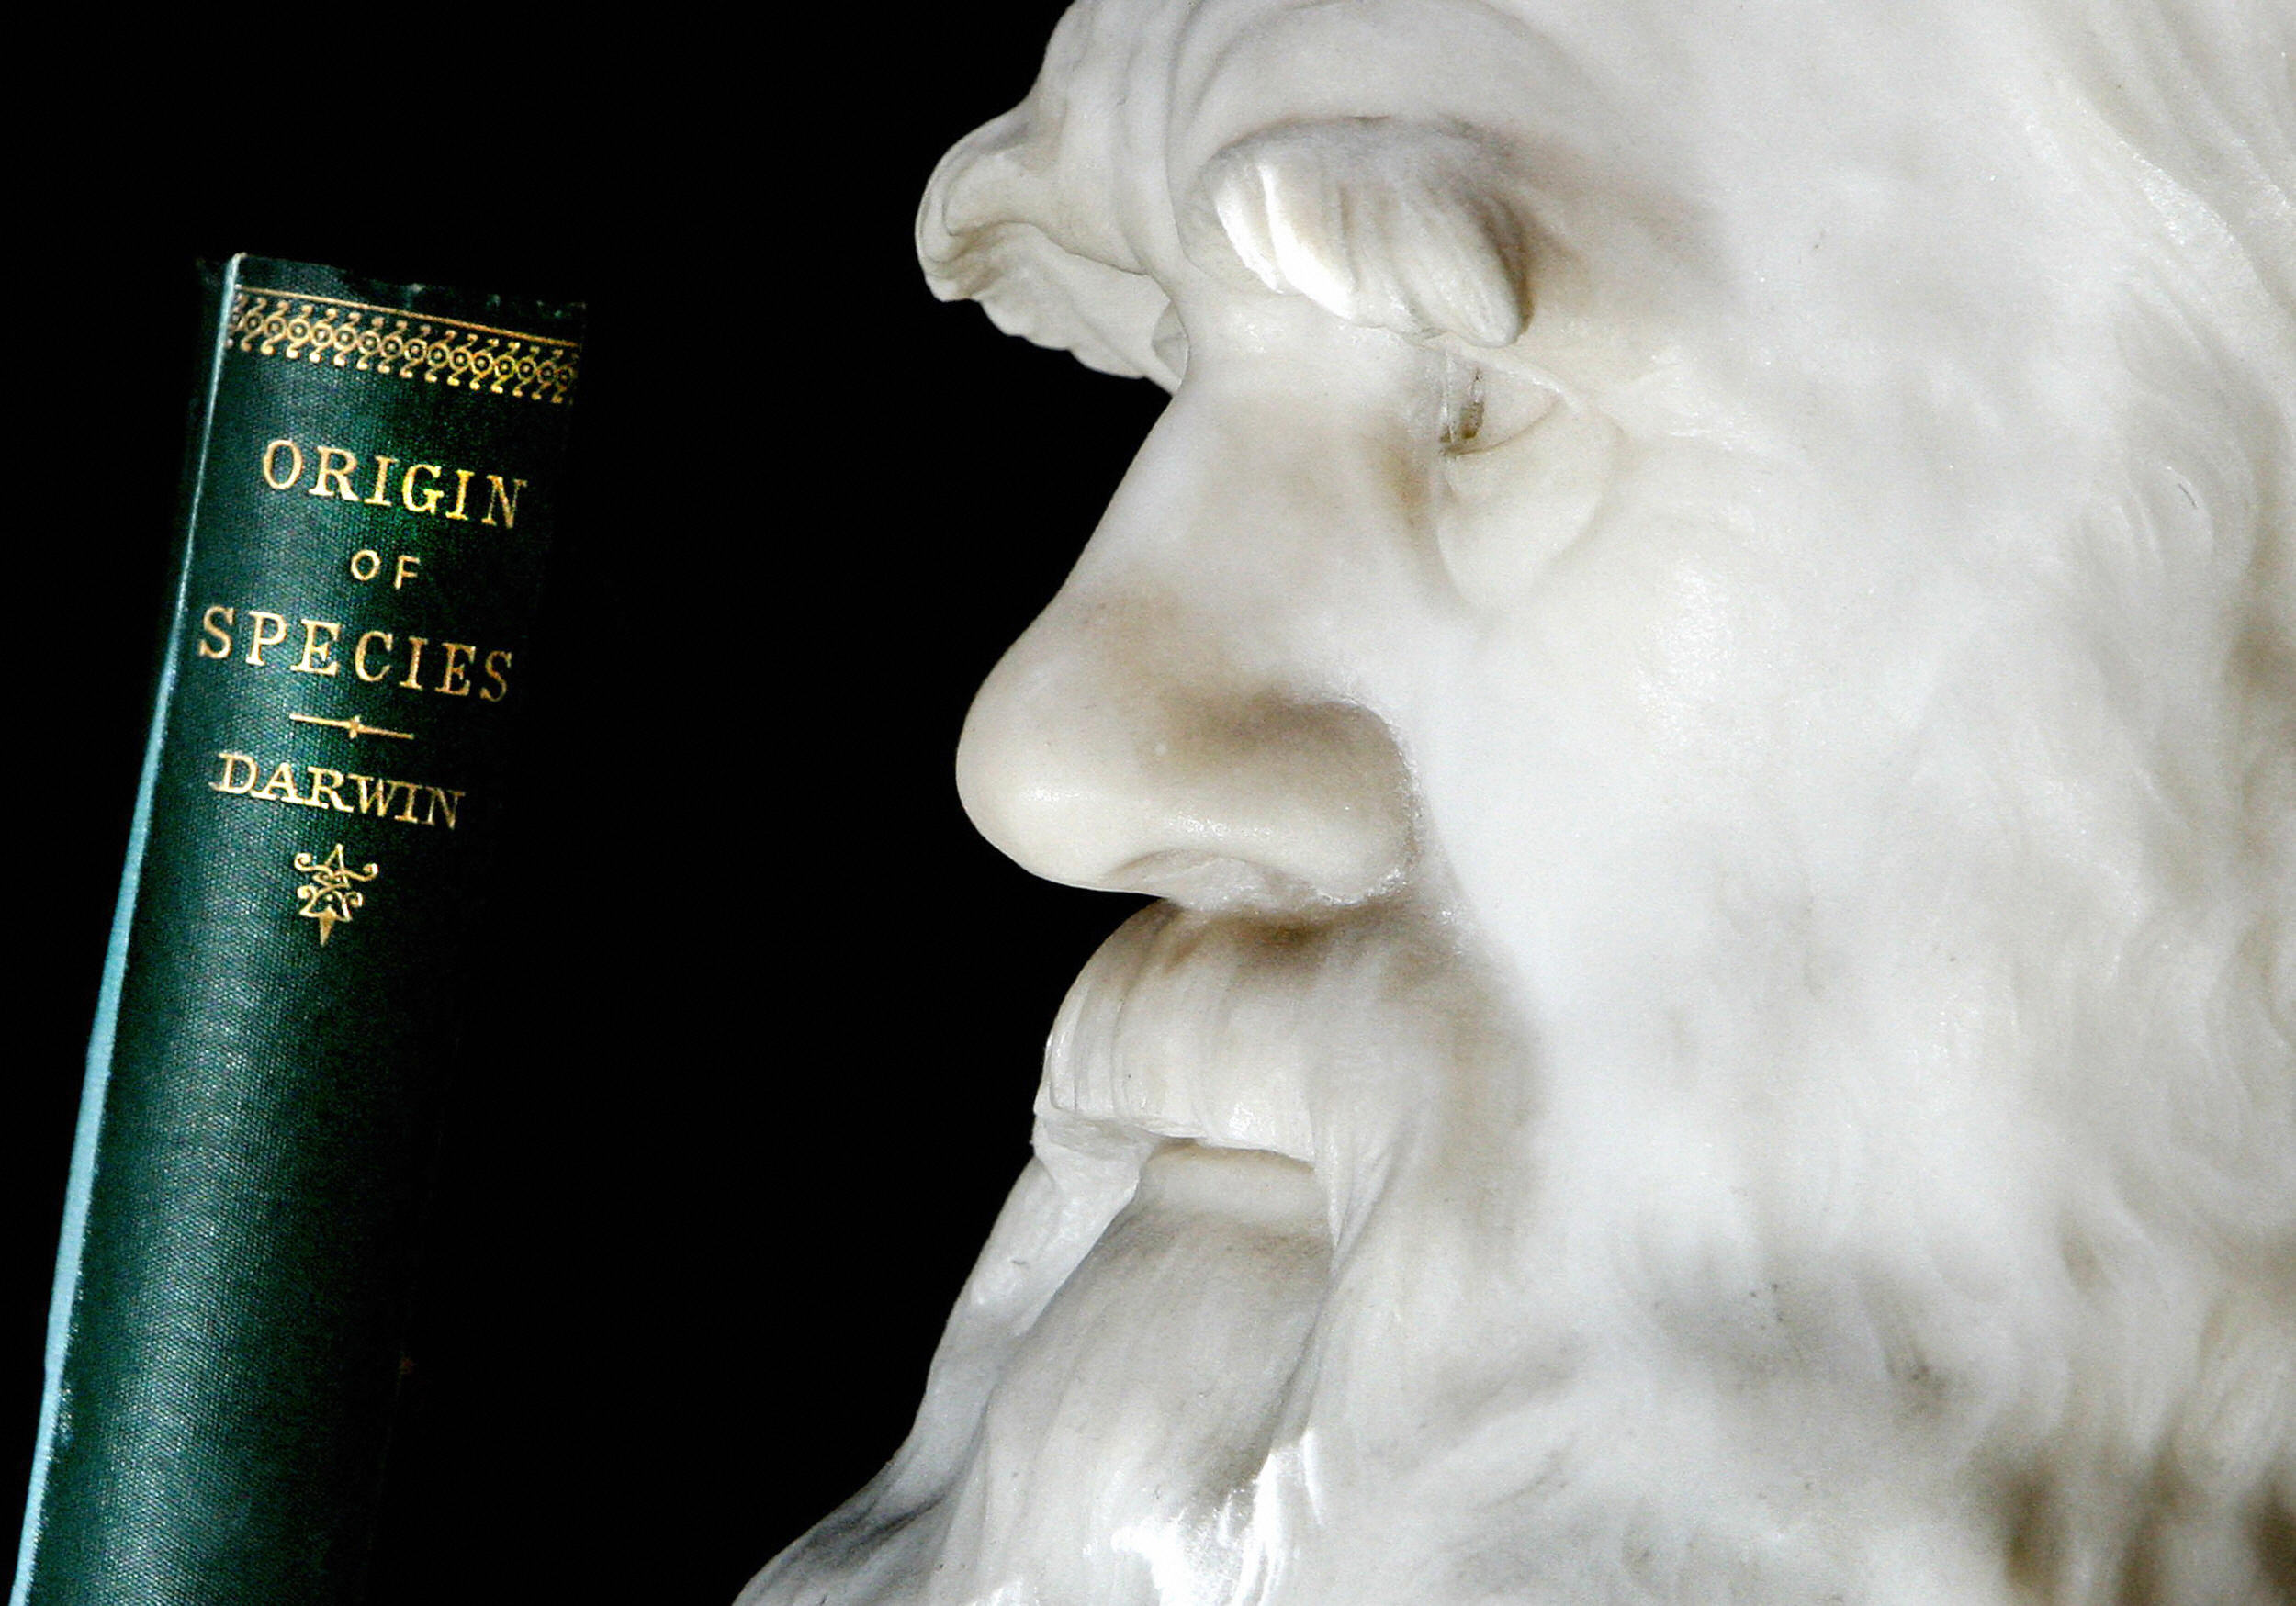 A copy of Darwin's book the "Origin of S